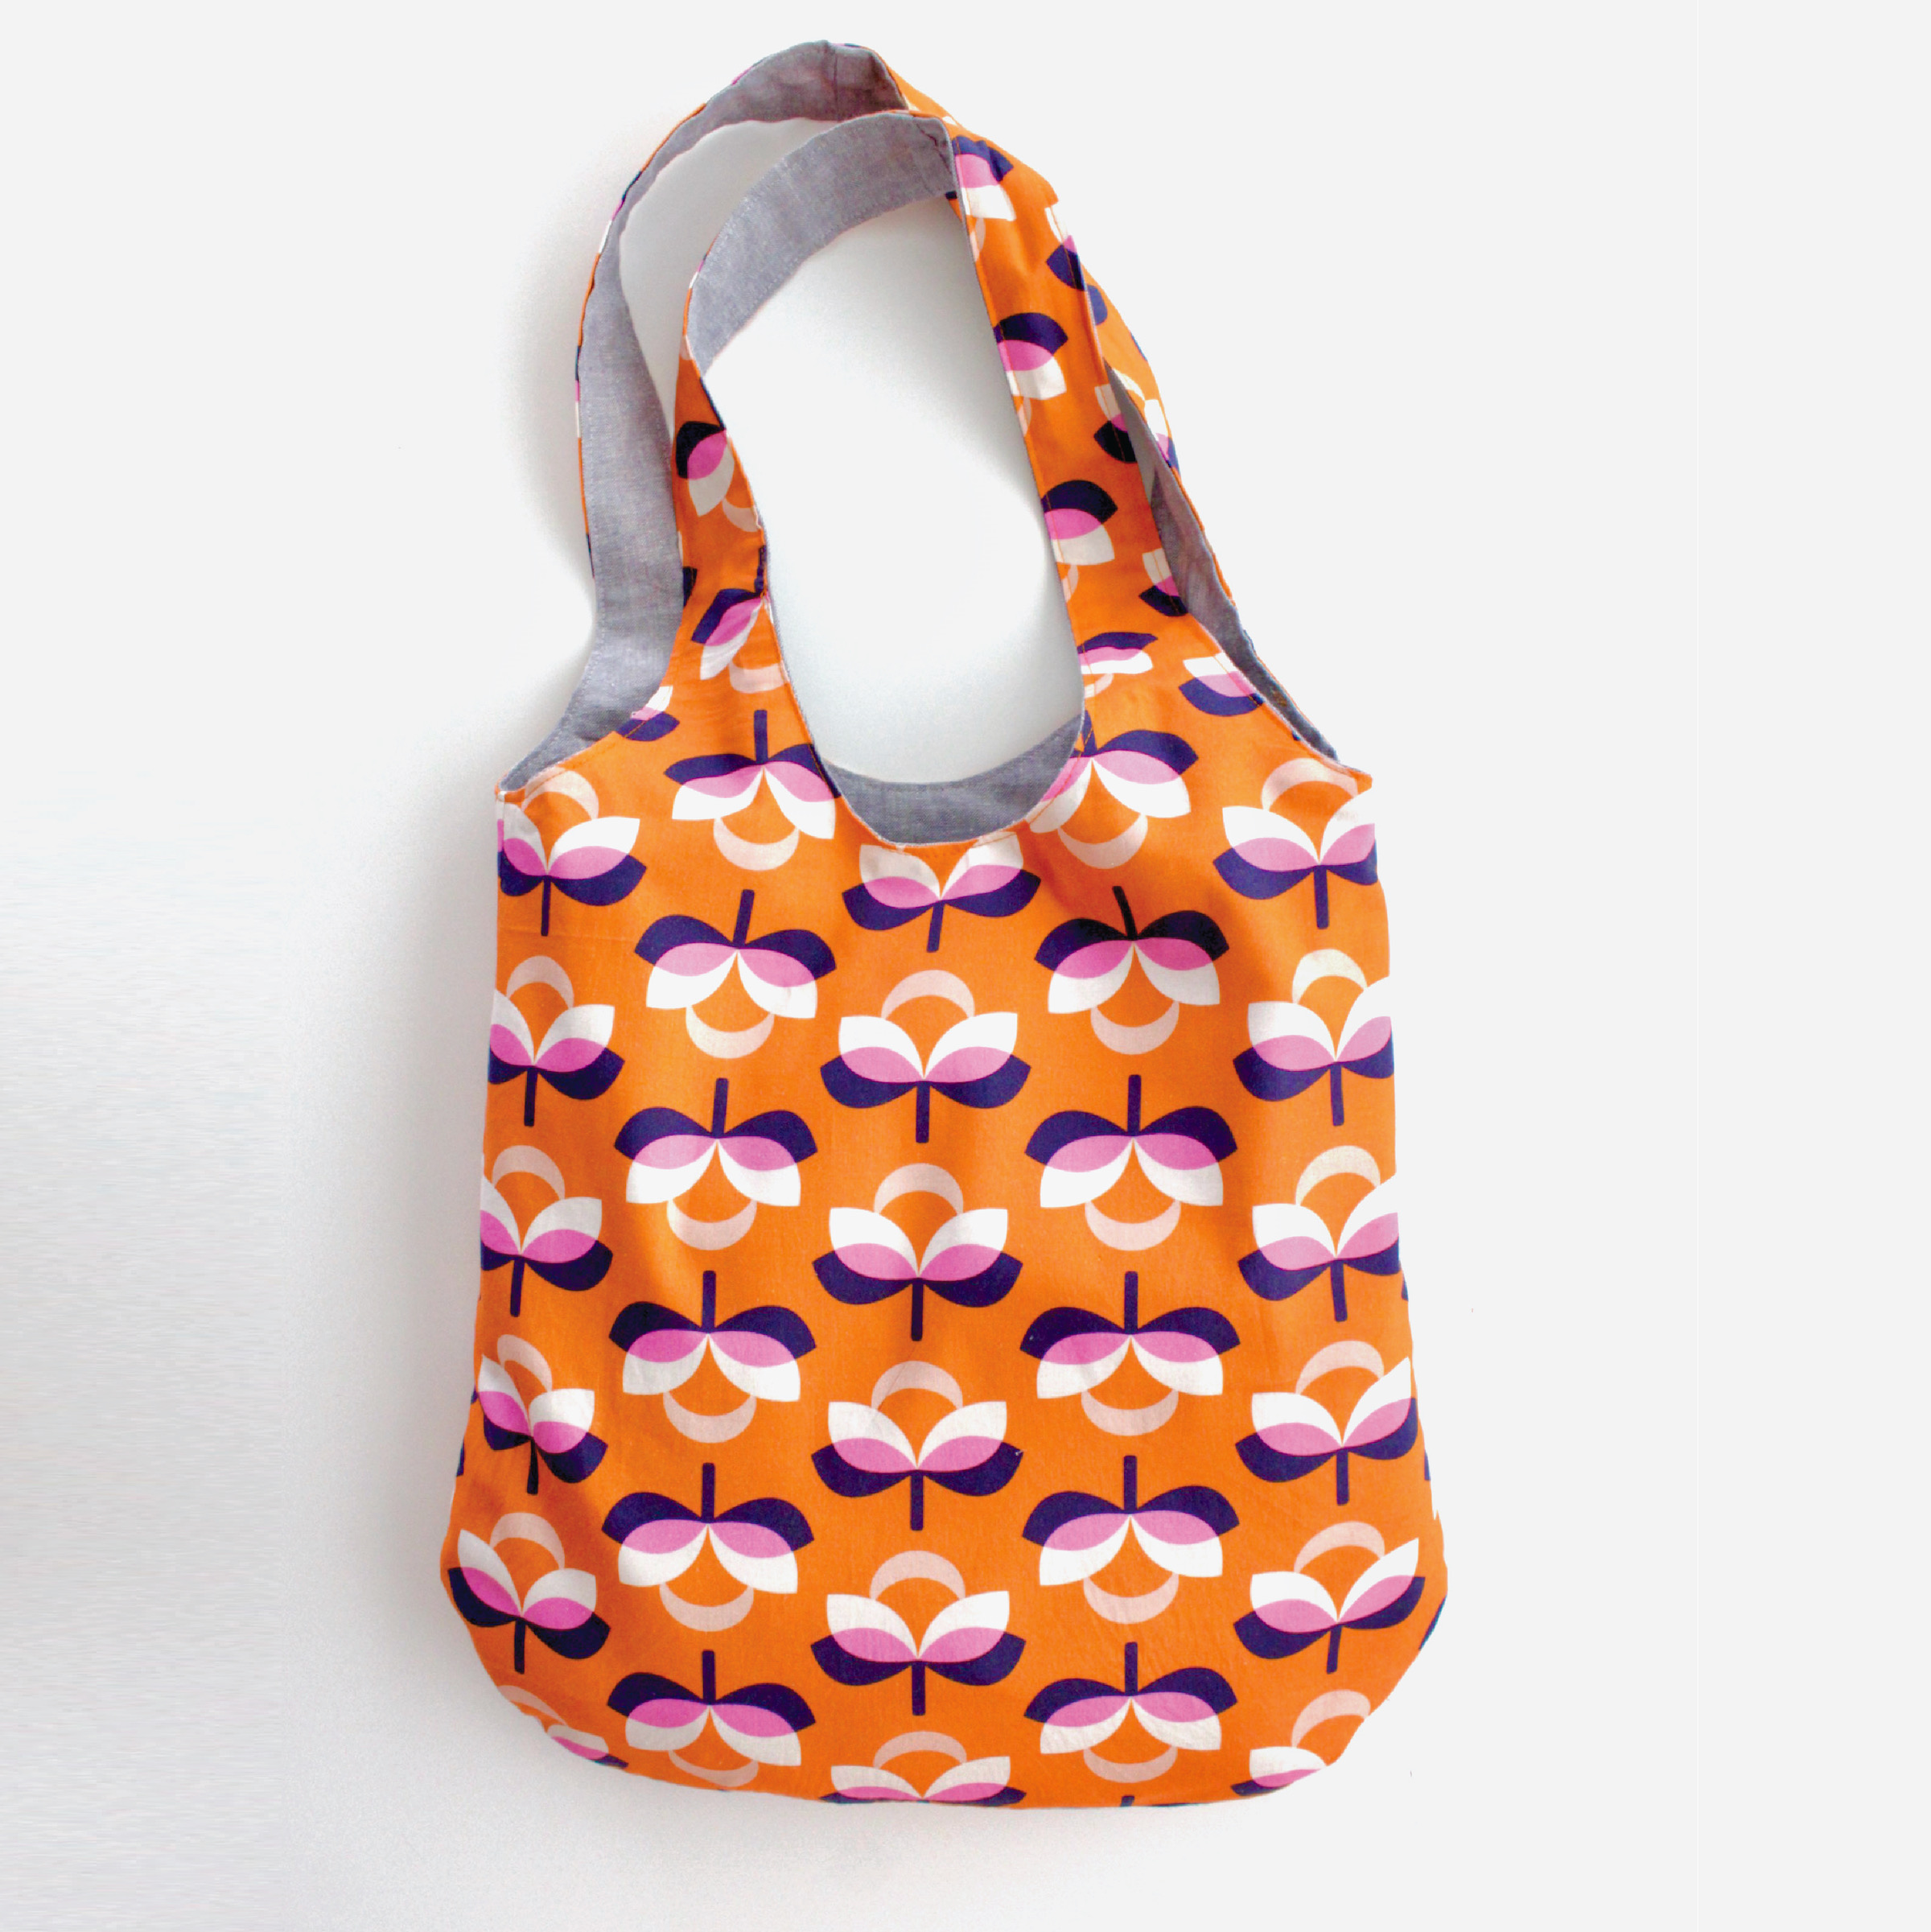 1/3 Pcs Cute Bag Pattern Template Set Sewing Pattern Template DIY